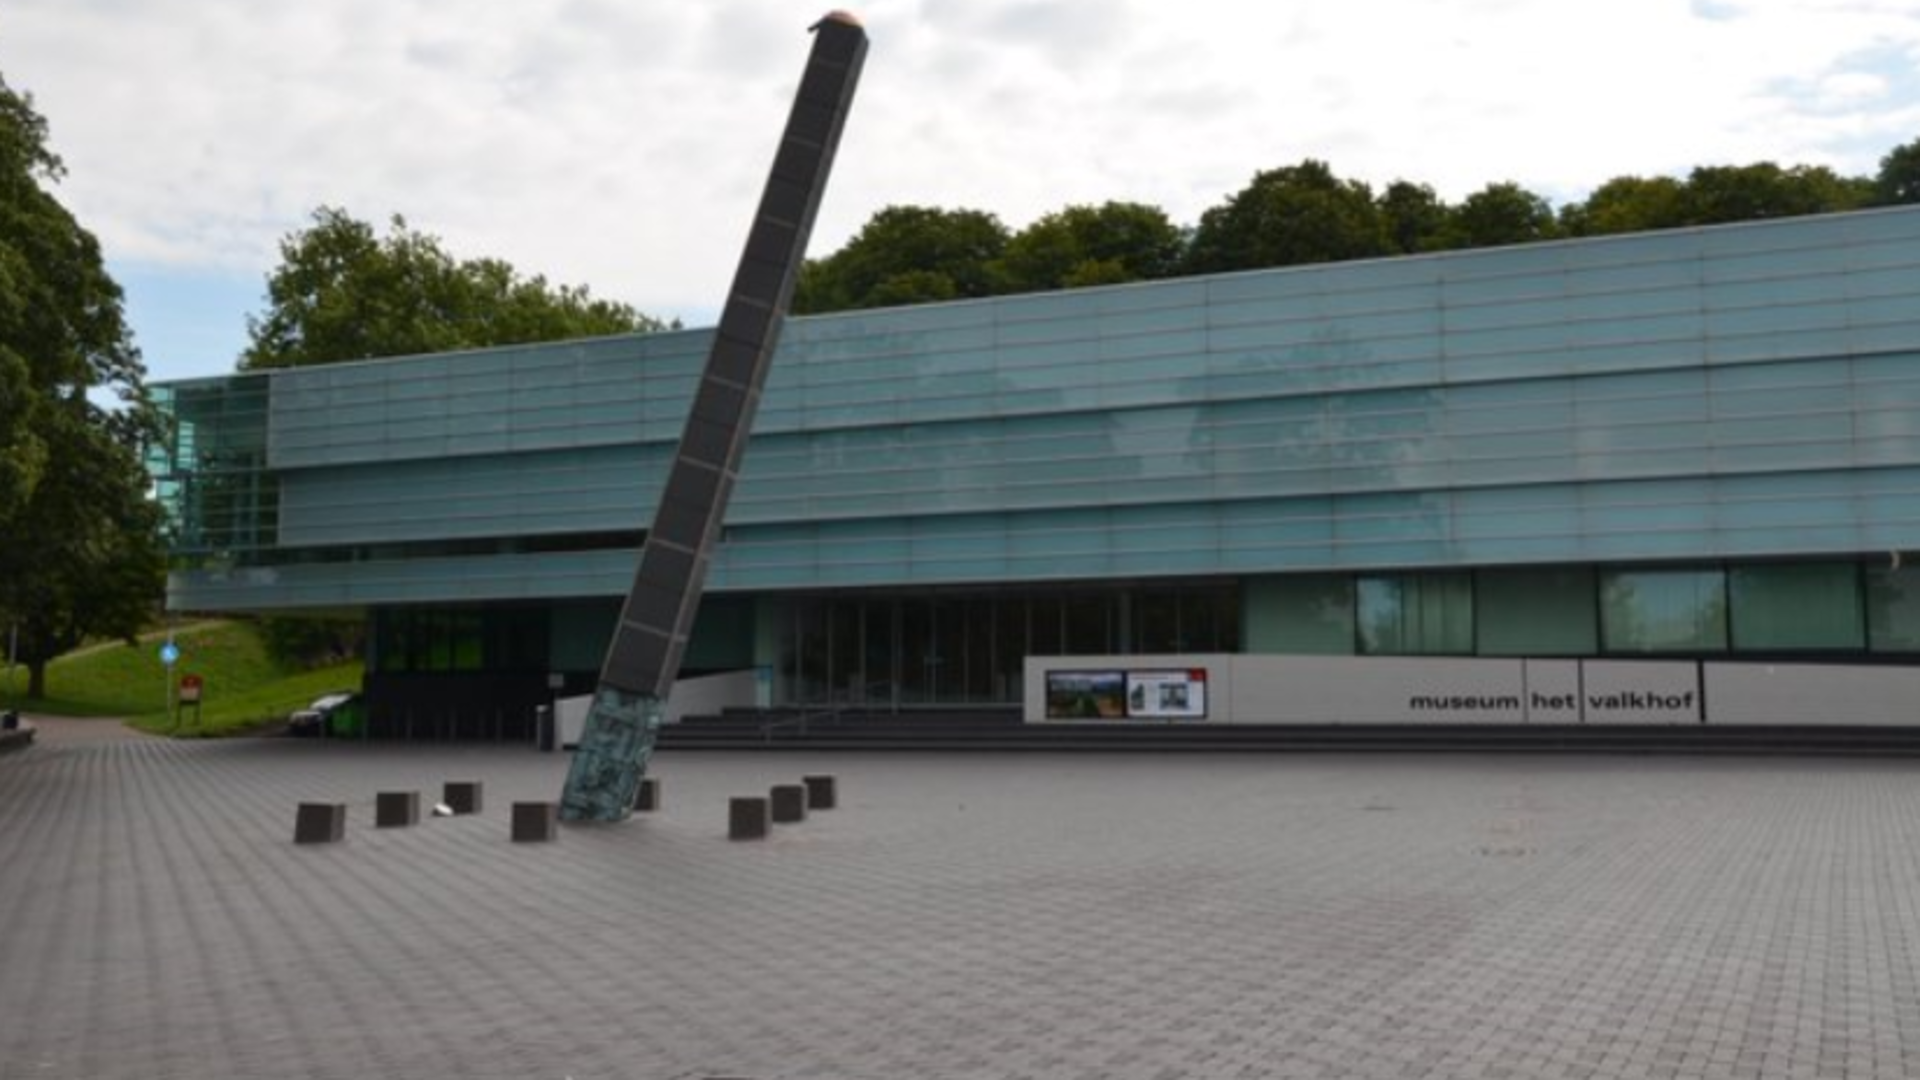 valkhofmuseum